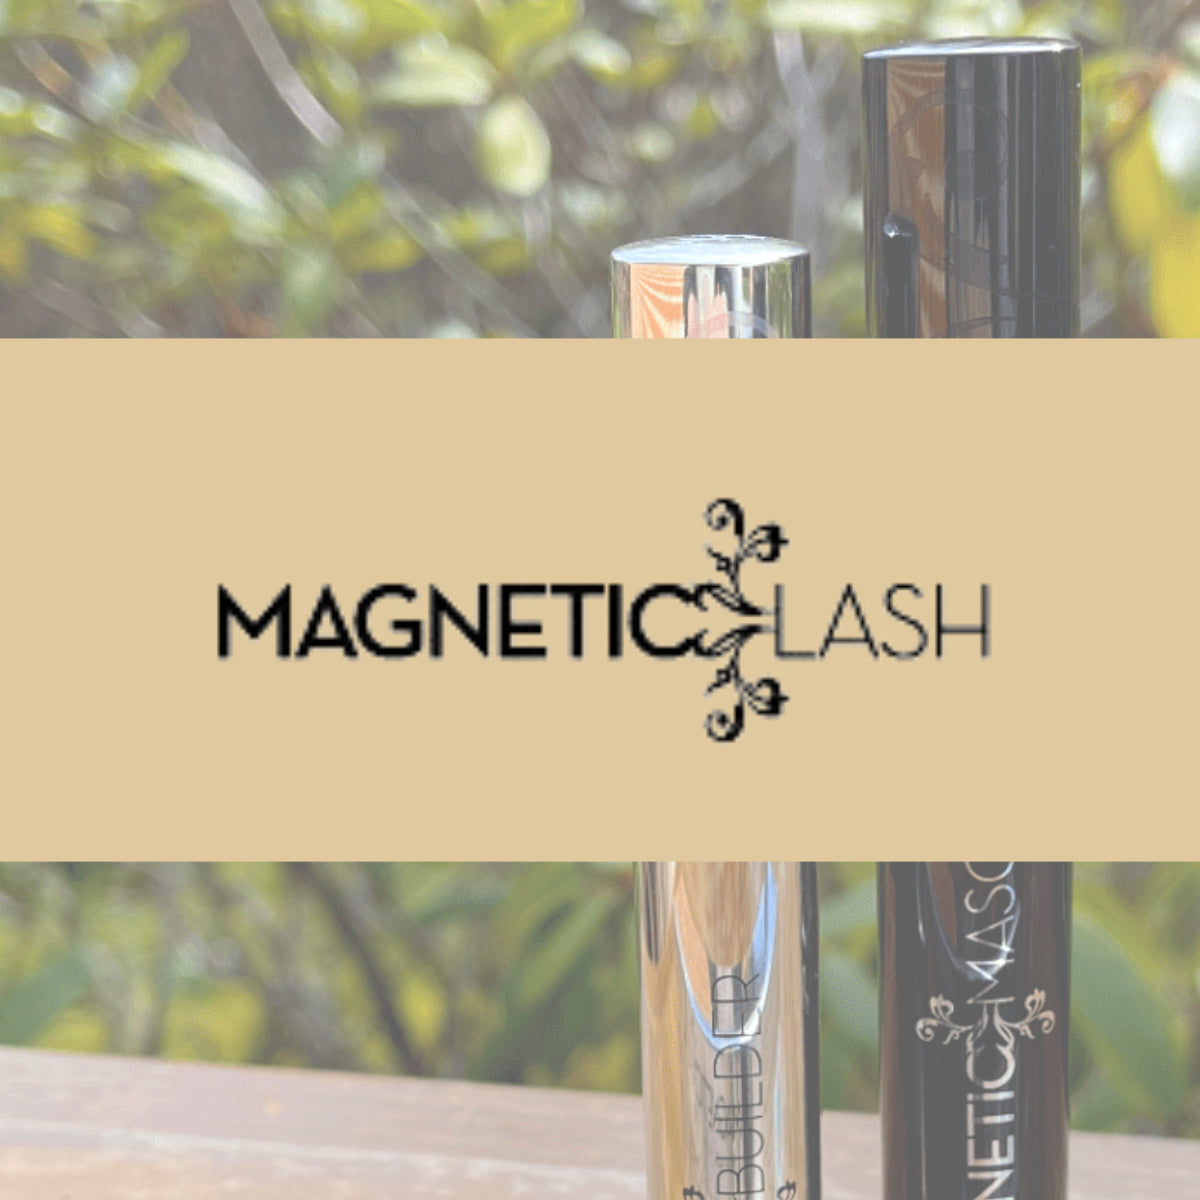 Magnetic lash